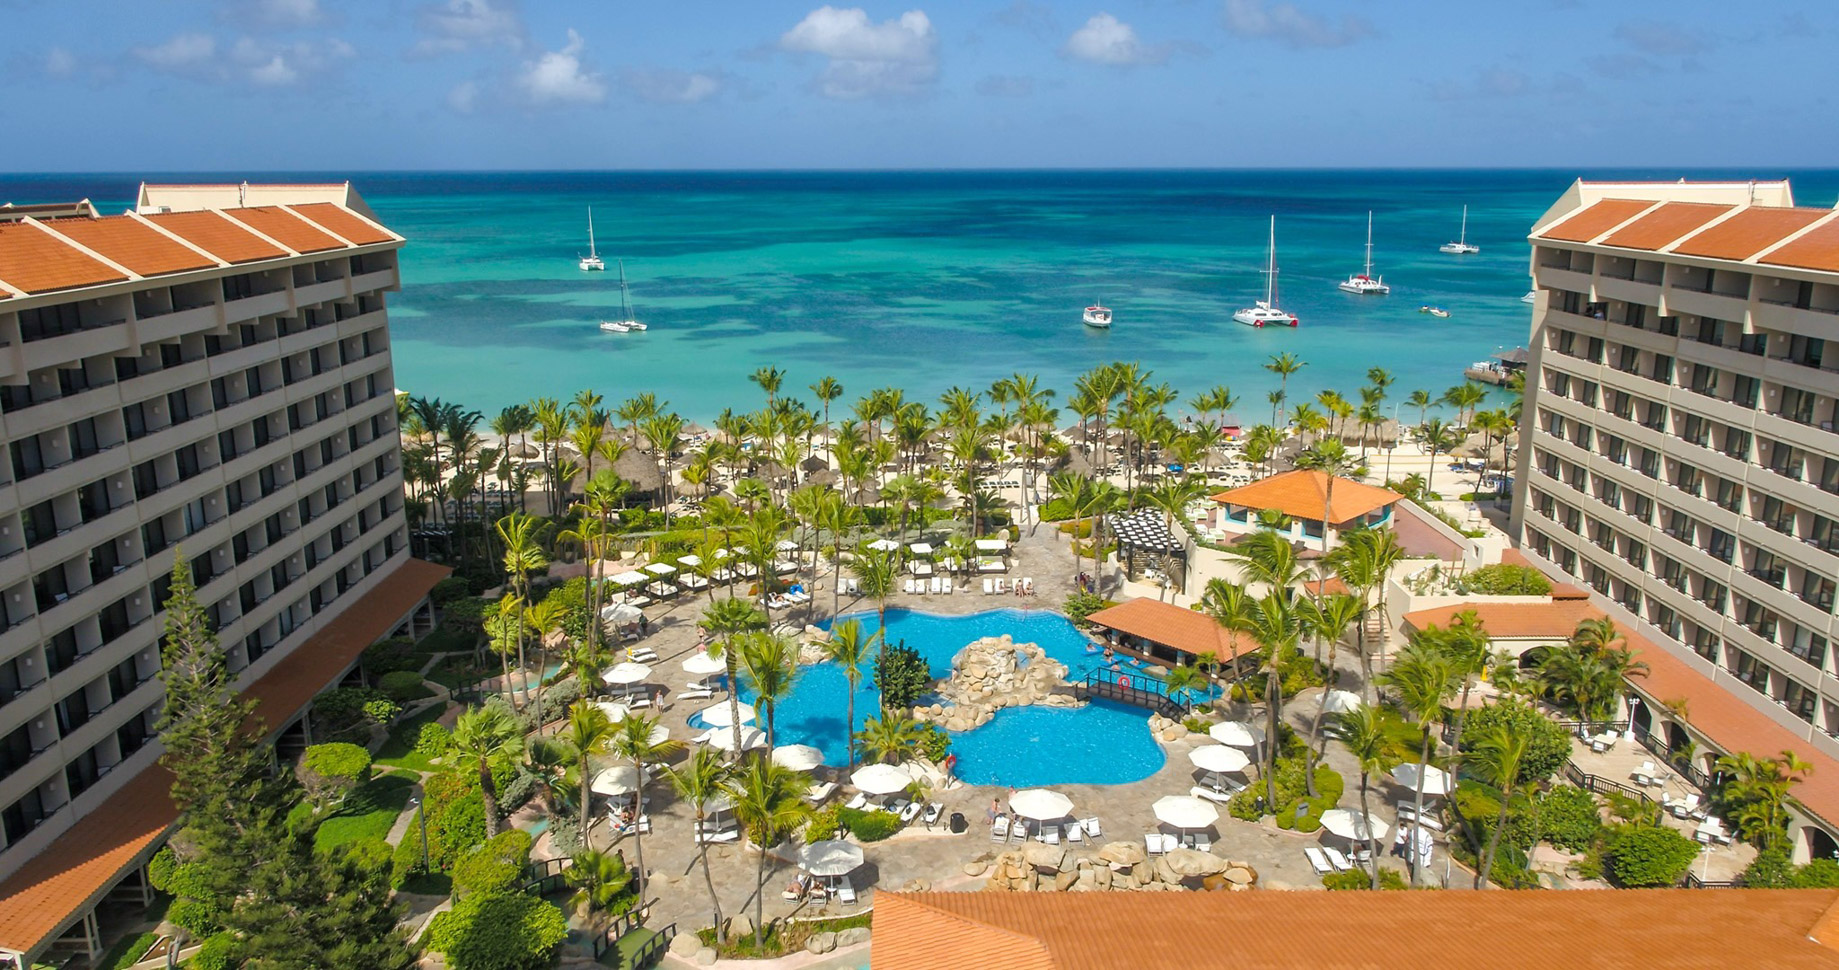 Barceló Aruba Palm Beach Resort - Noord, Aruba - Pool Aerial View